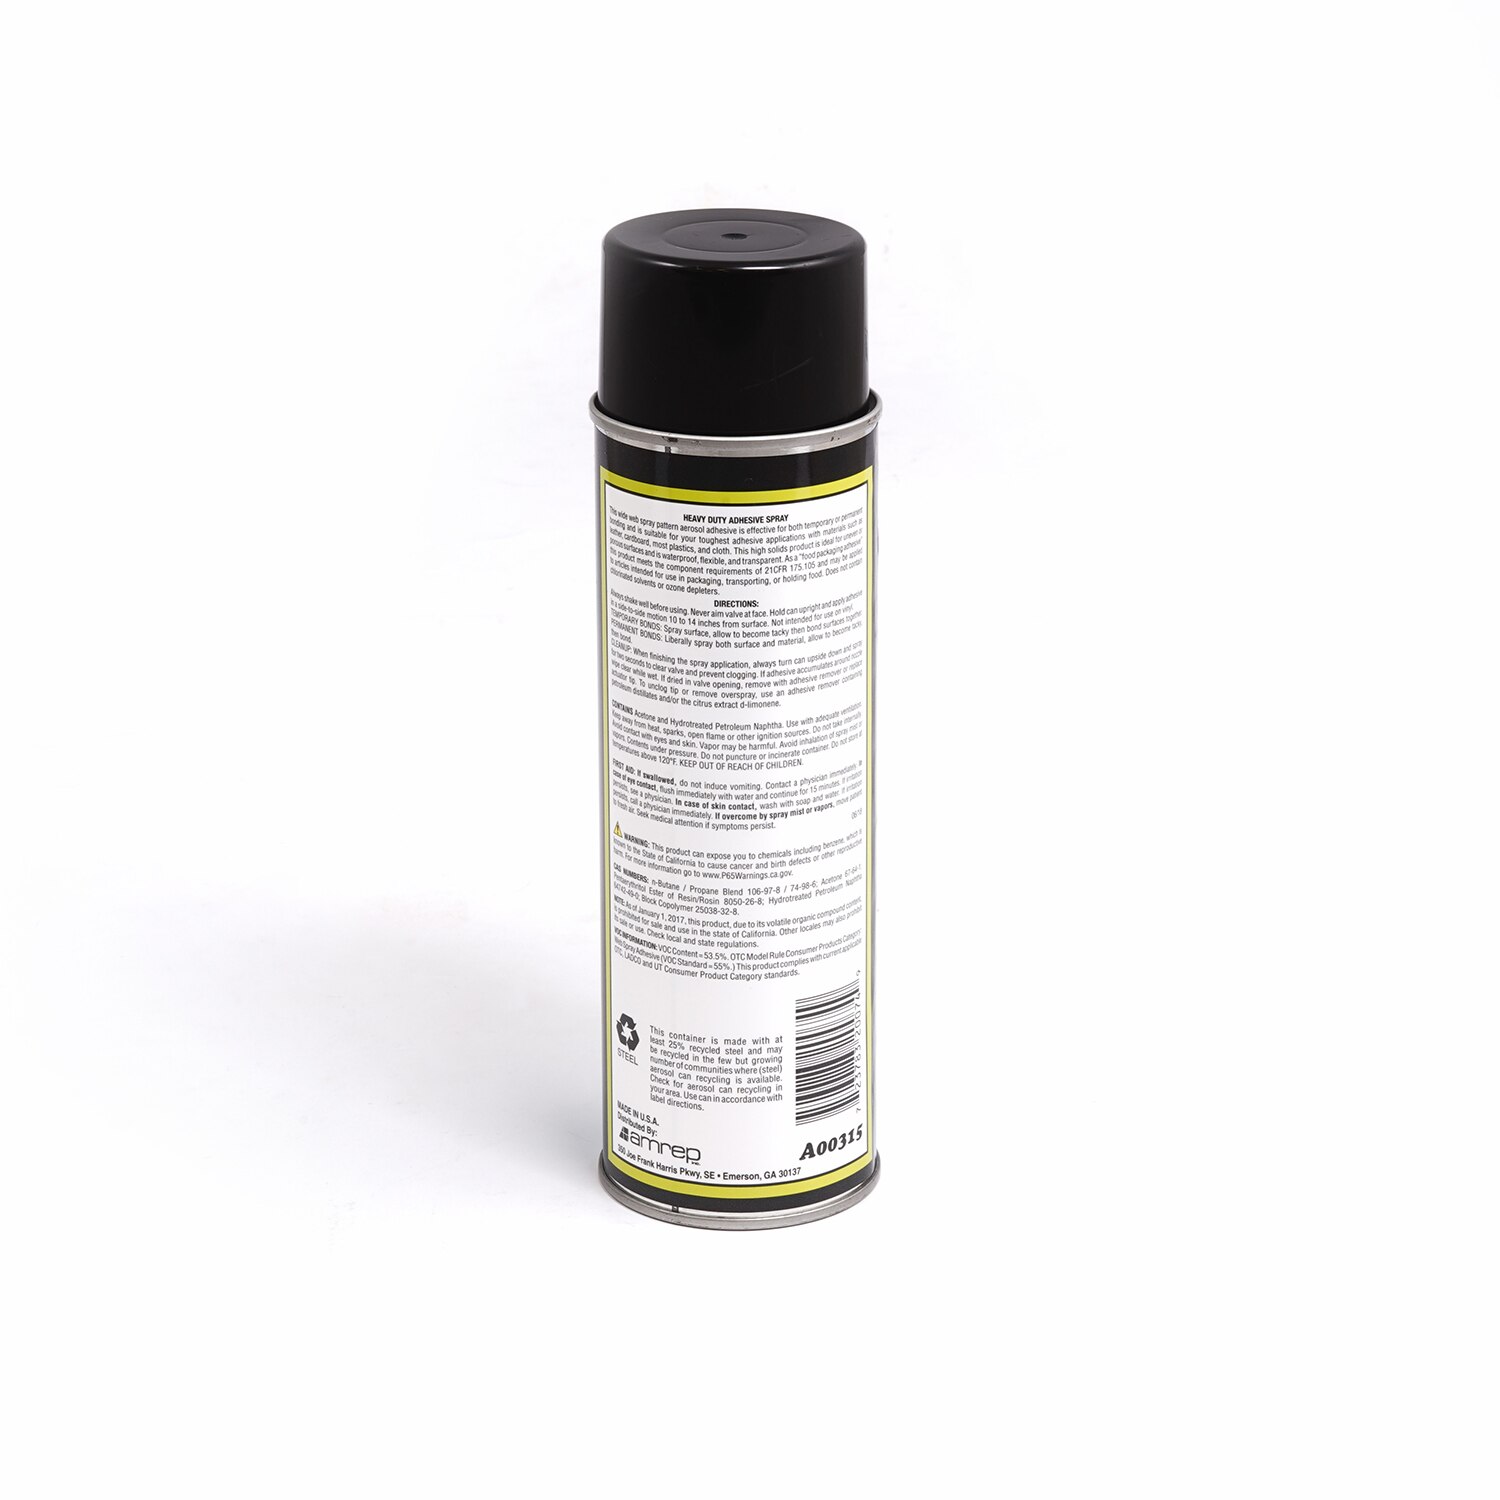 V&S #581 Foam & Fabric Spray Glue Adhesive 12 oz